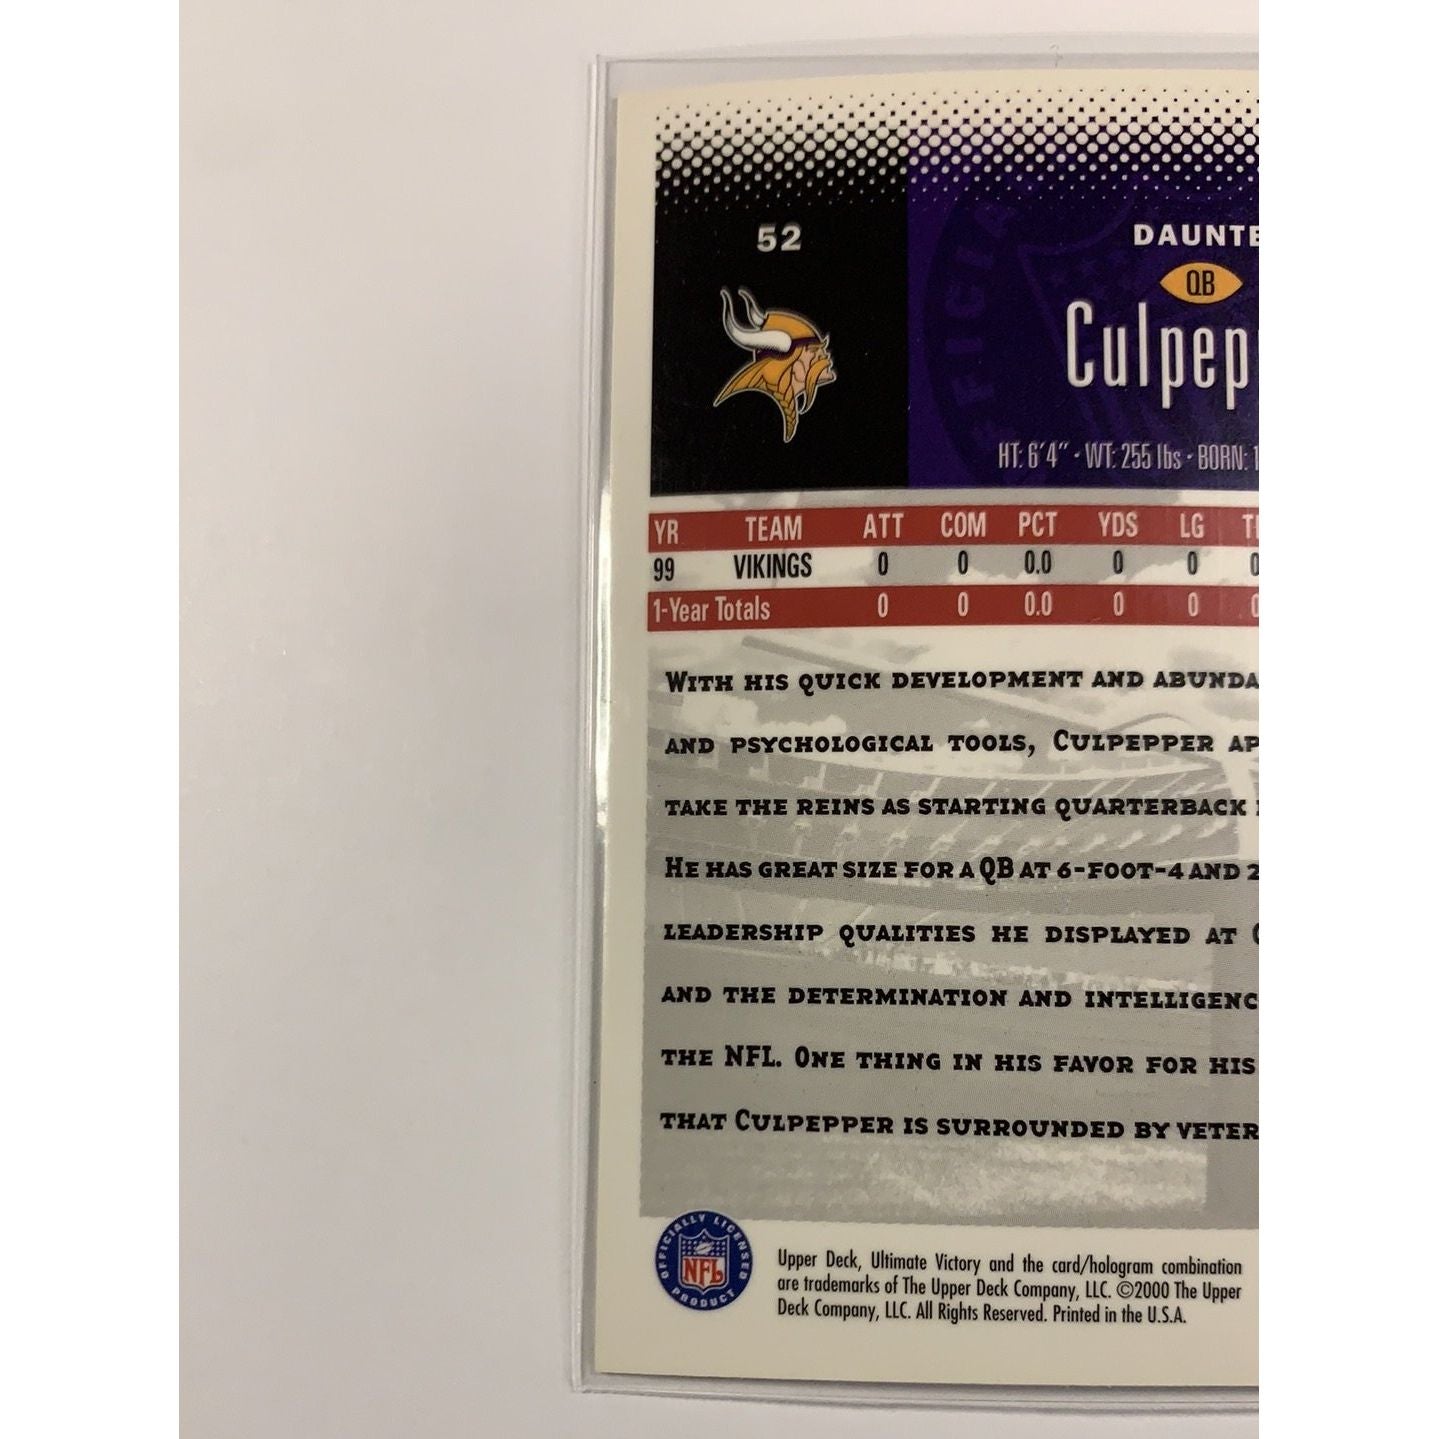  2000 Upper Deck Daunte Culpepper Base #52  Local Legends Cards & Collectibles